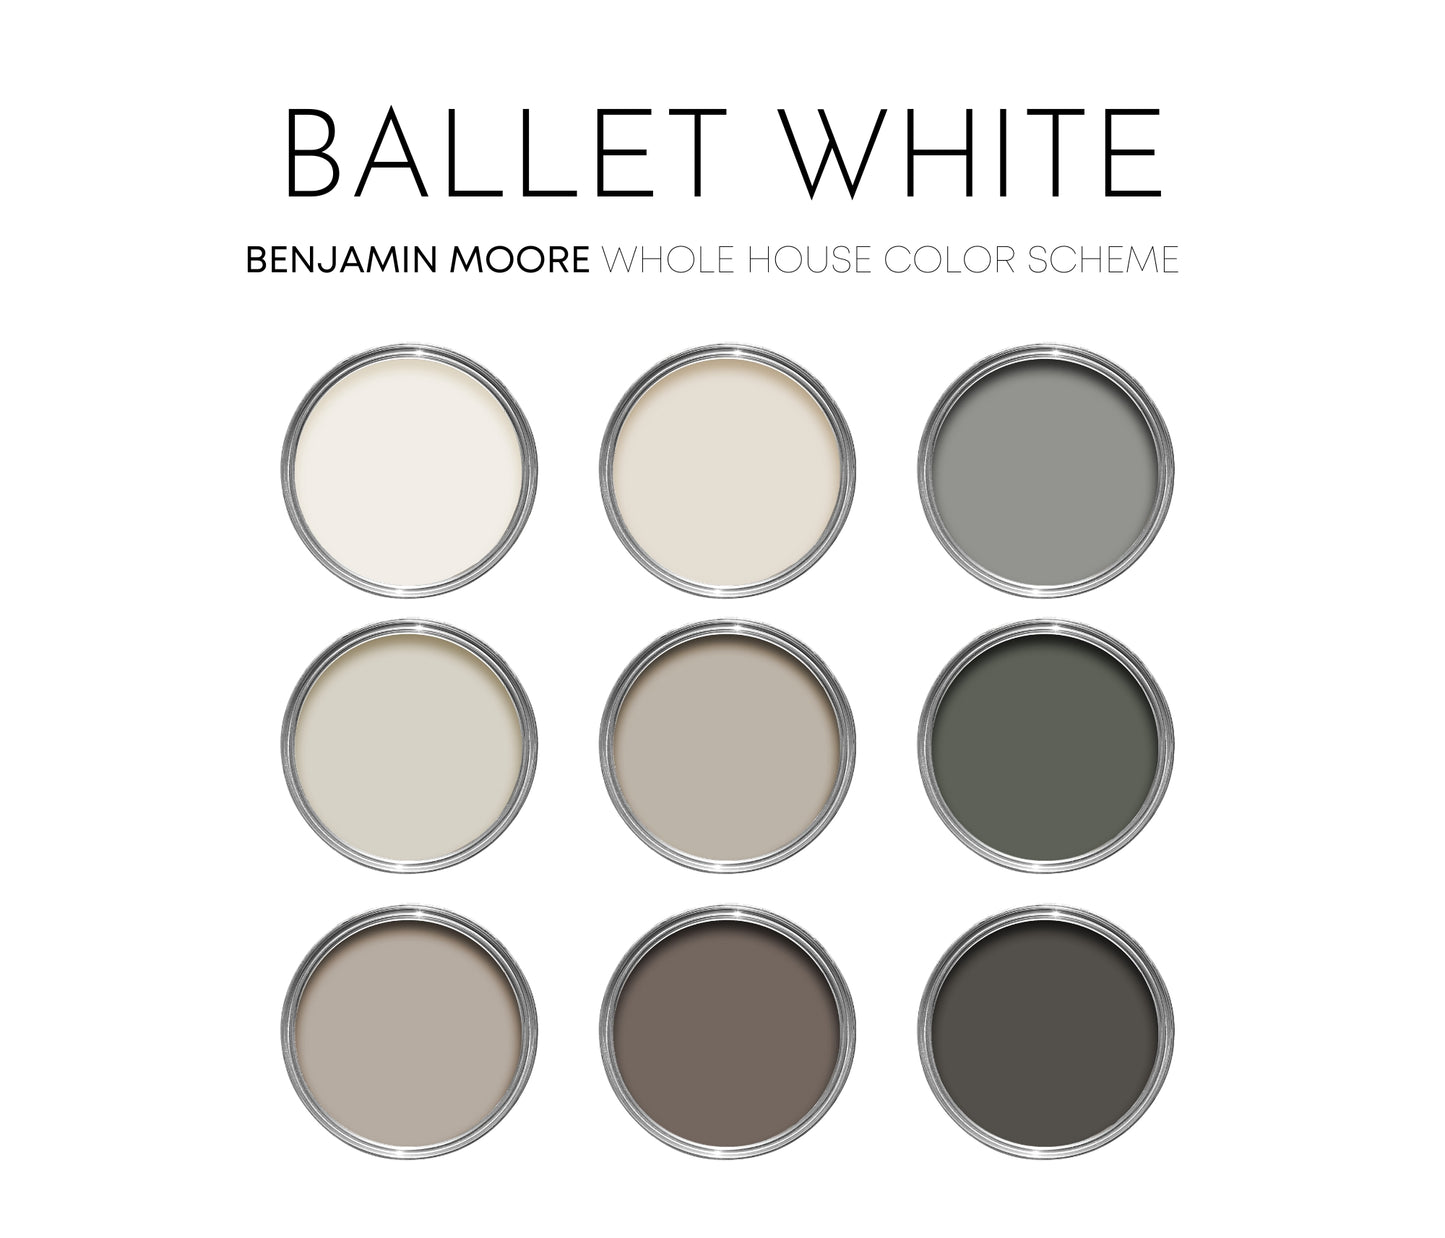 Ballet White Benjamin Moore Paint Palette, Modern Neutral Interior Paint Colors for Home, Ballet White Compliments, Warm Whites, Sea Salt